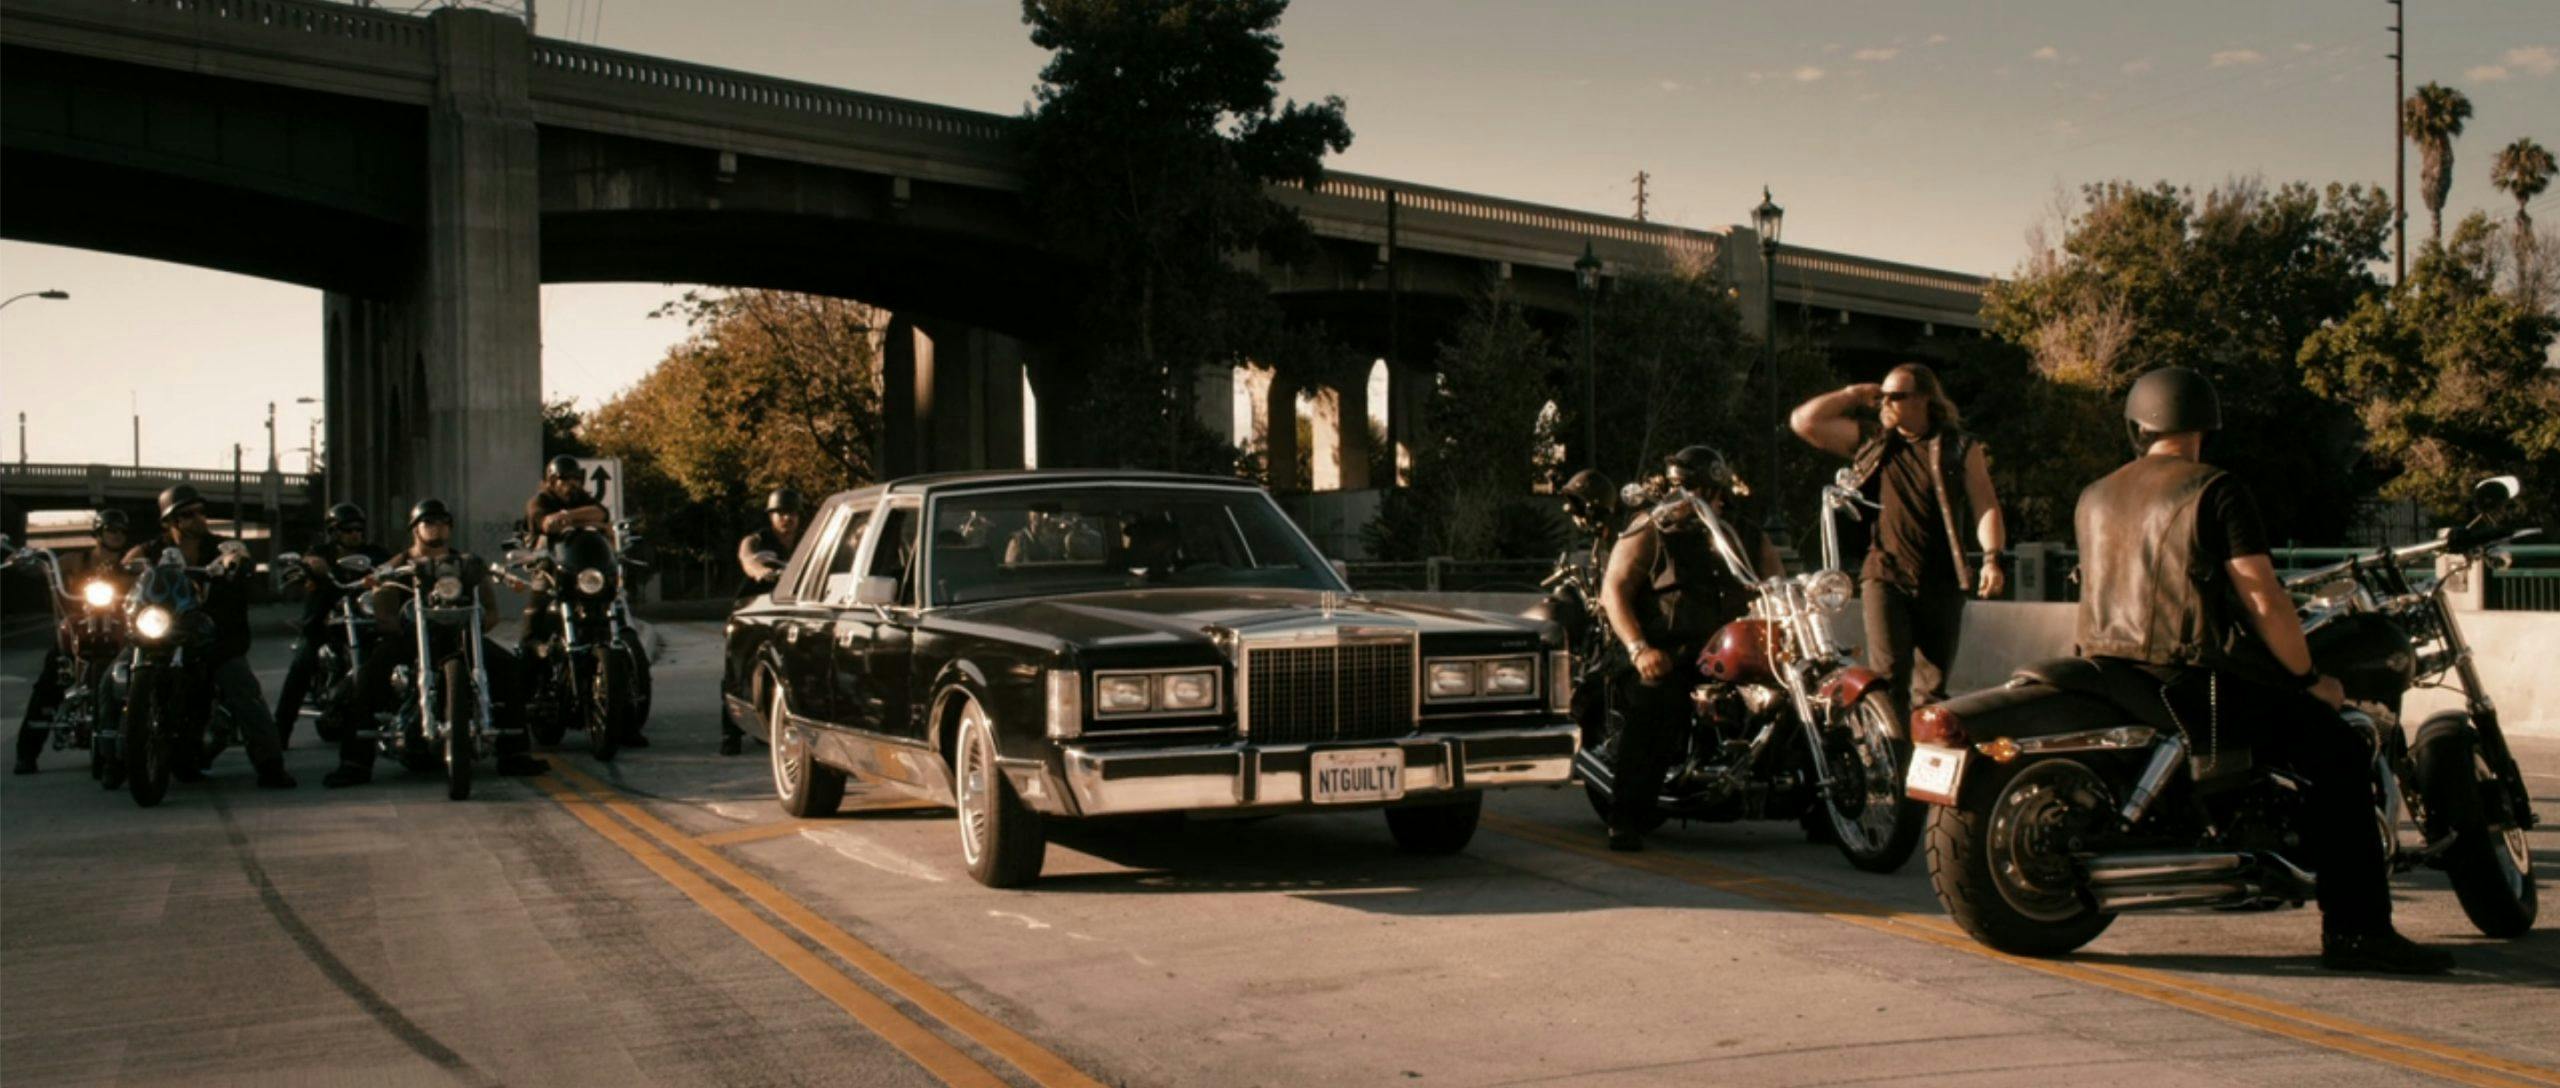 Lincoln Lawyer 2011 film front three-quarter biker gang